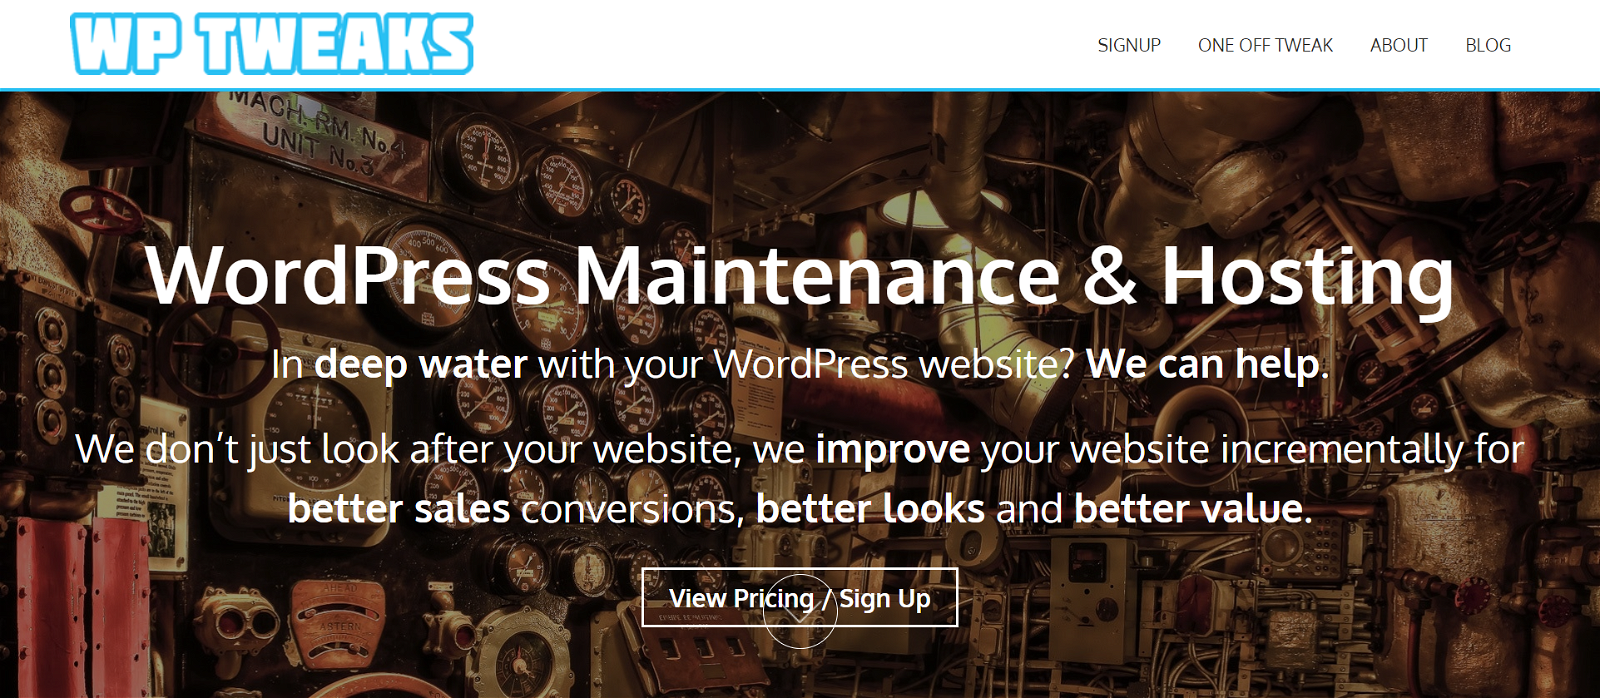 WPTweaks WordPress Services